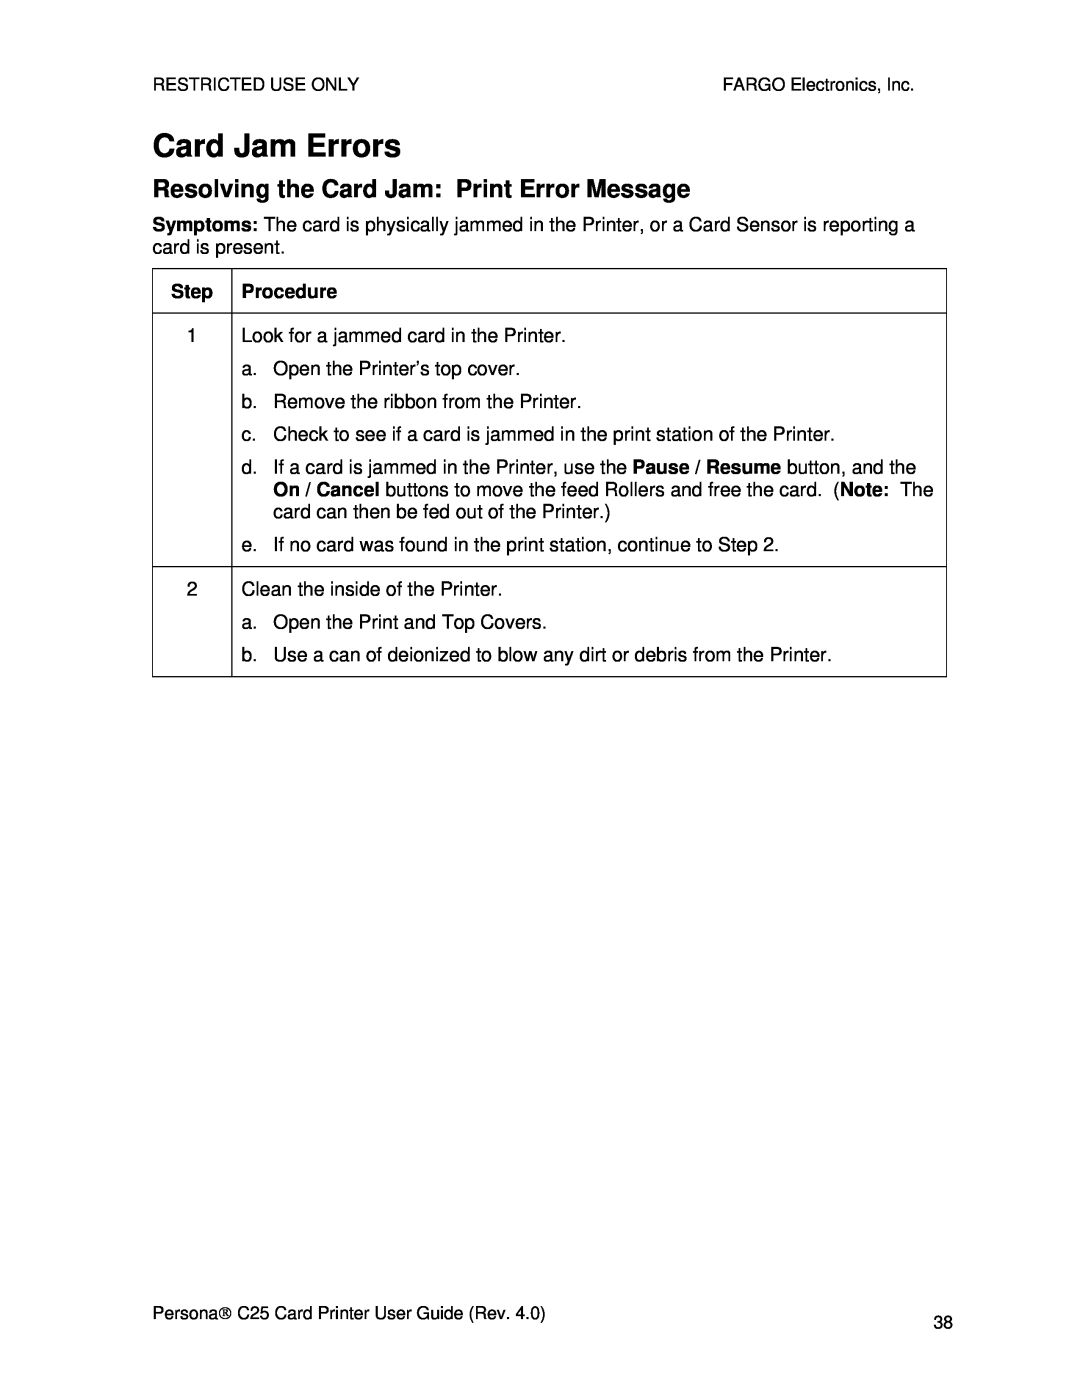 FARGO electronic S000256 manual Card Jam Errors, Resolving the Card Jam Print Error Message 